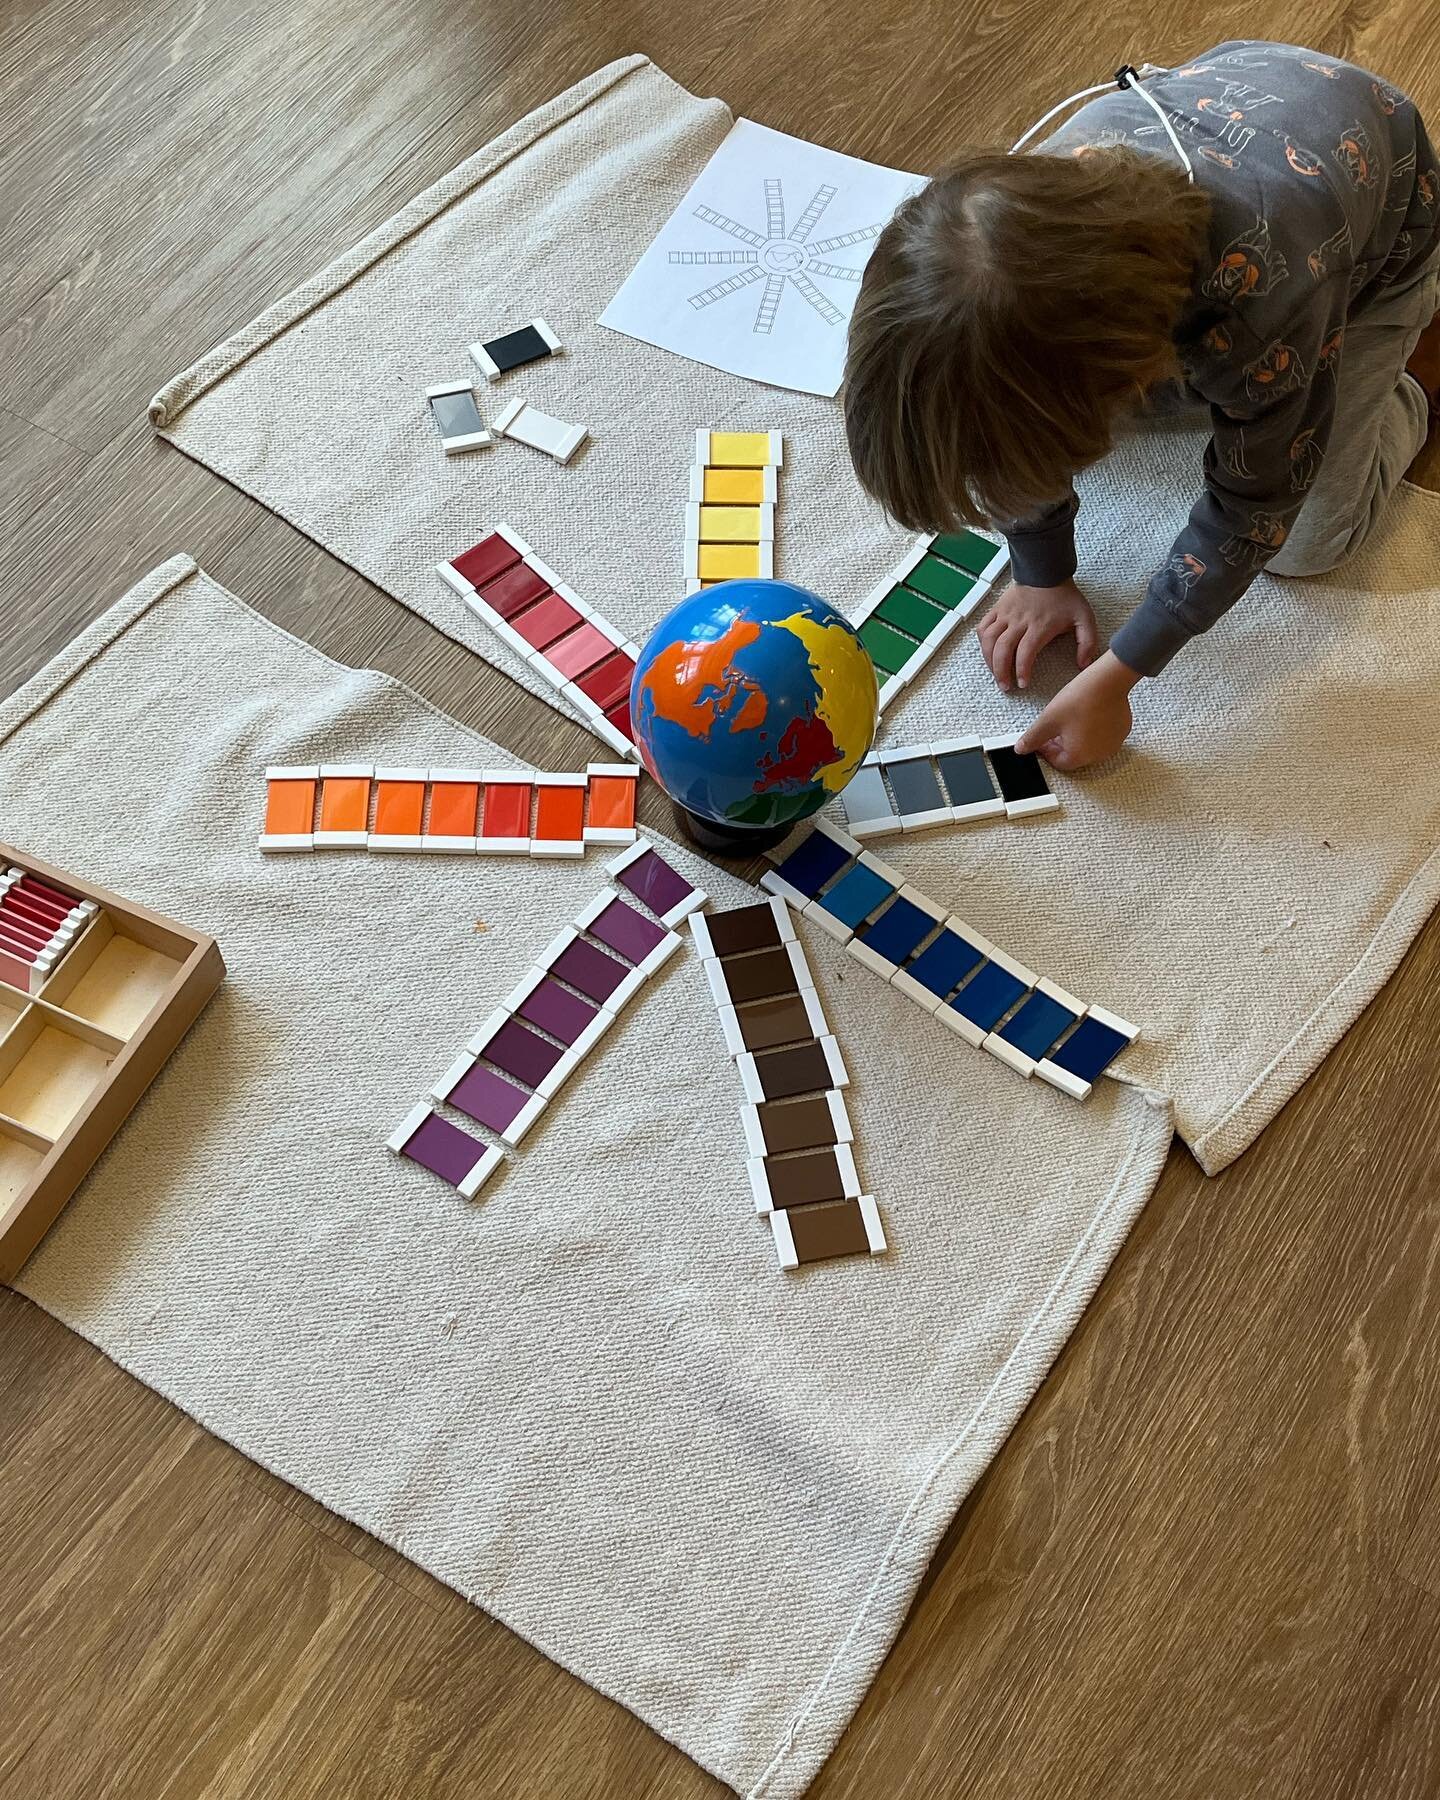 Working with our beautiful Montessori materials.  #montessori #bethlehem #bethlehempa #lehighvalley #figbethlehem #igbethlehem